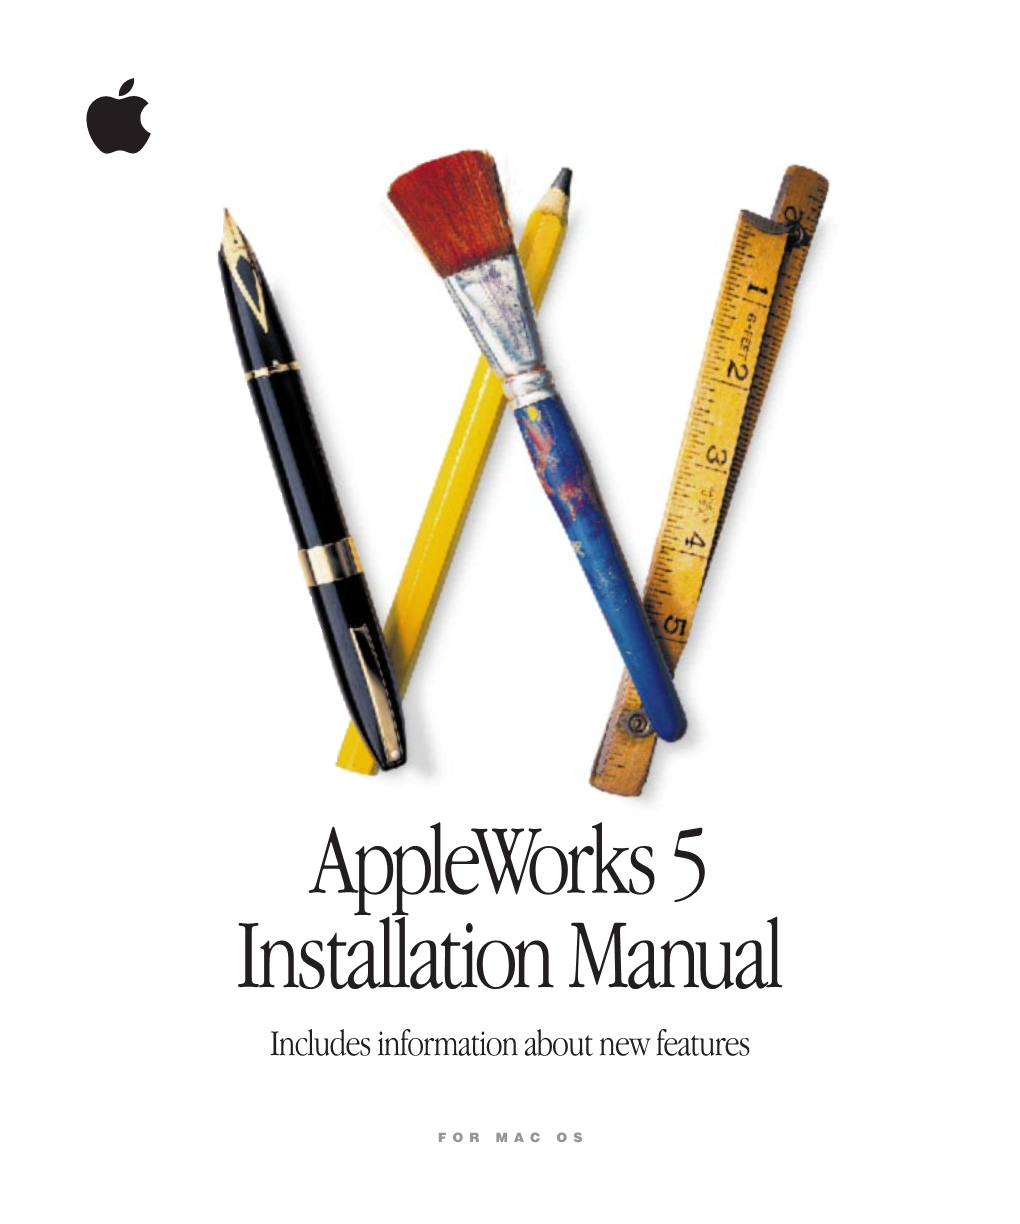 Appleworks 5 Installation Manual: for Mac OS